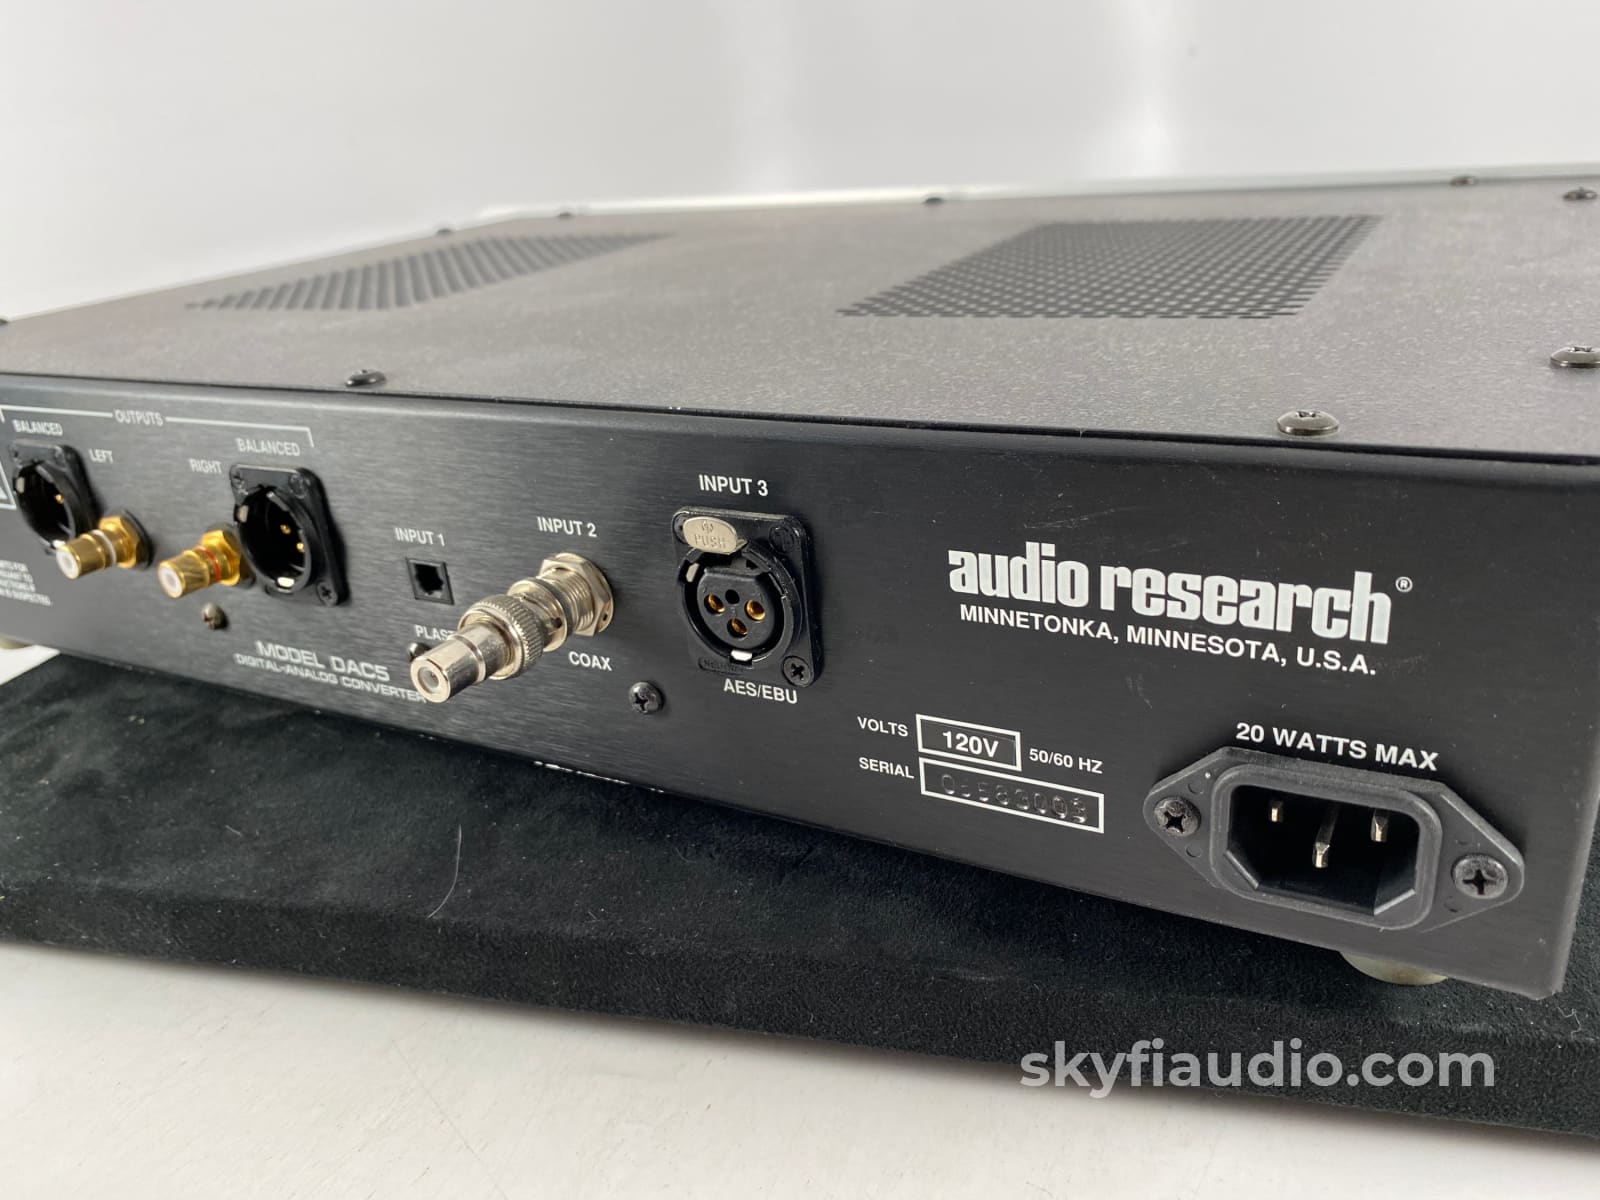 Audio Research Model Dac5 Digital To Analog Converter 20-Bit Resolution Cd +